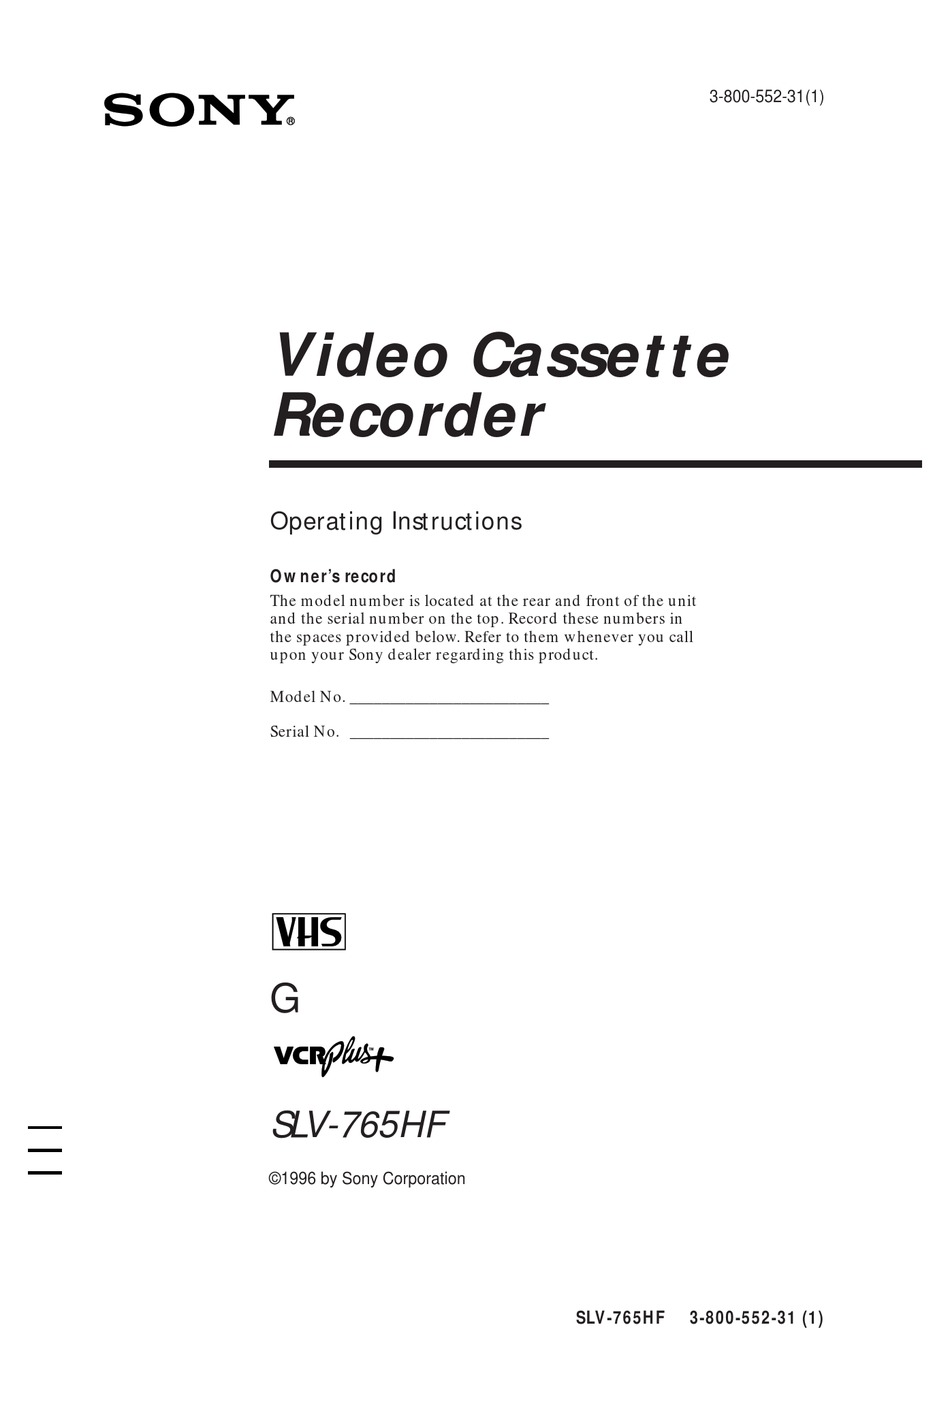 Sony SLV-765HF VHS VCR Video Cassette Tape Recorder 